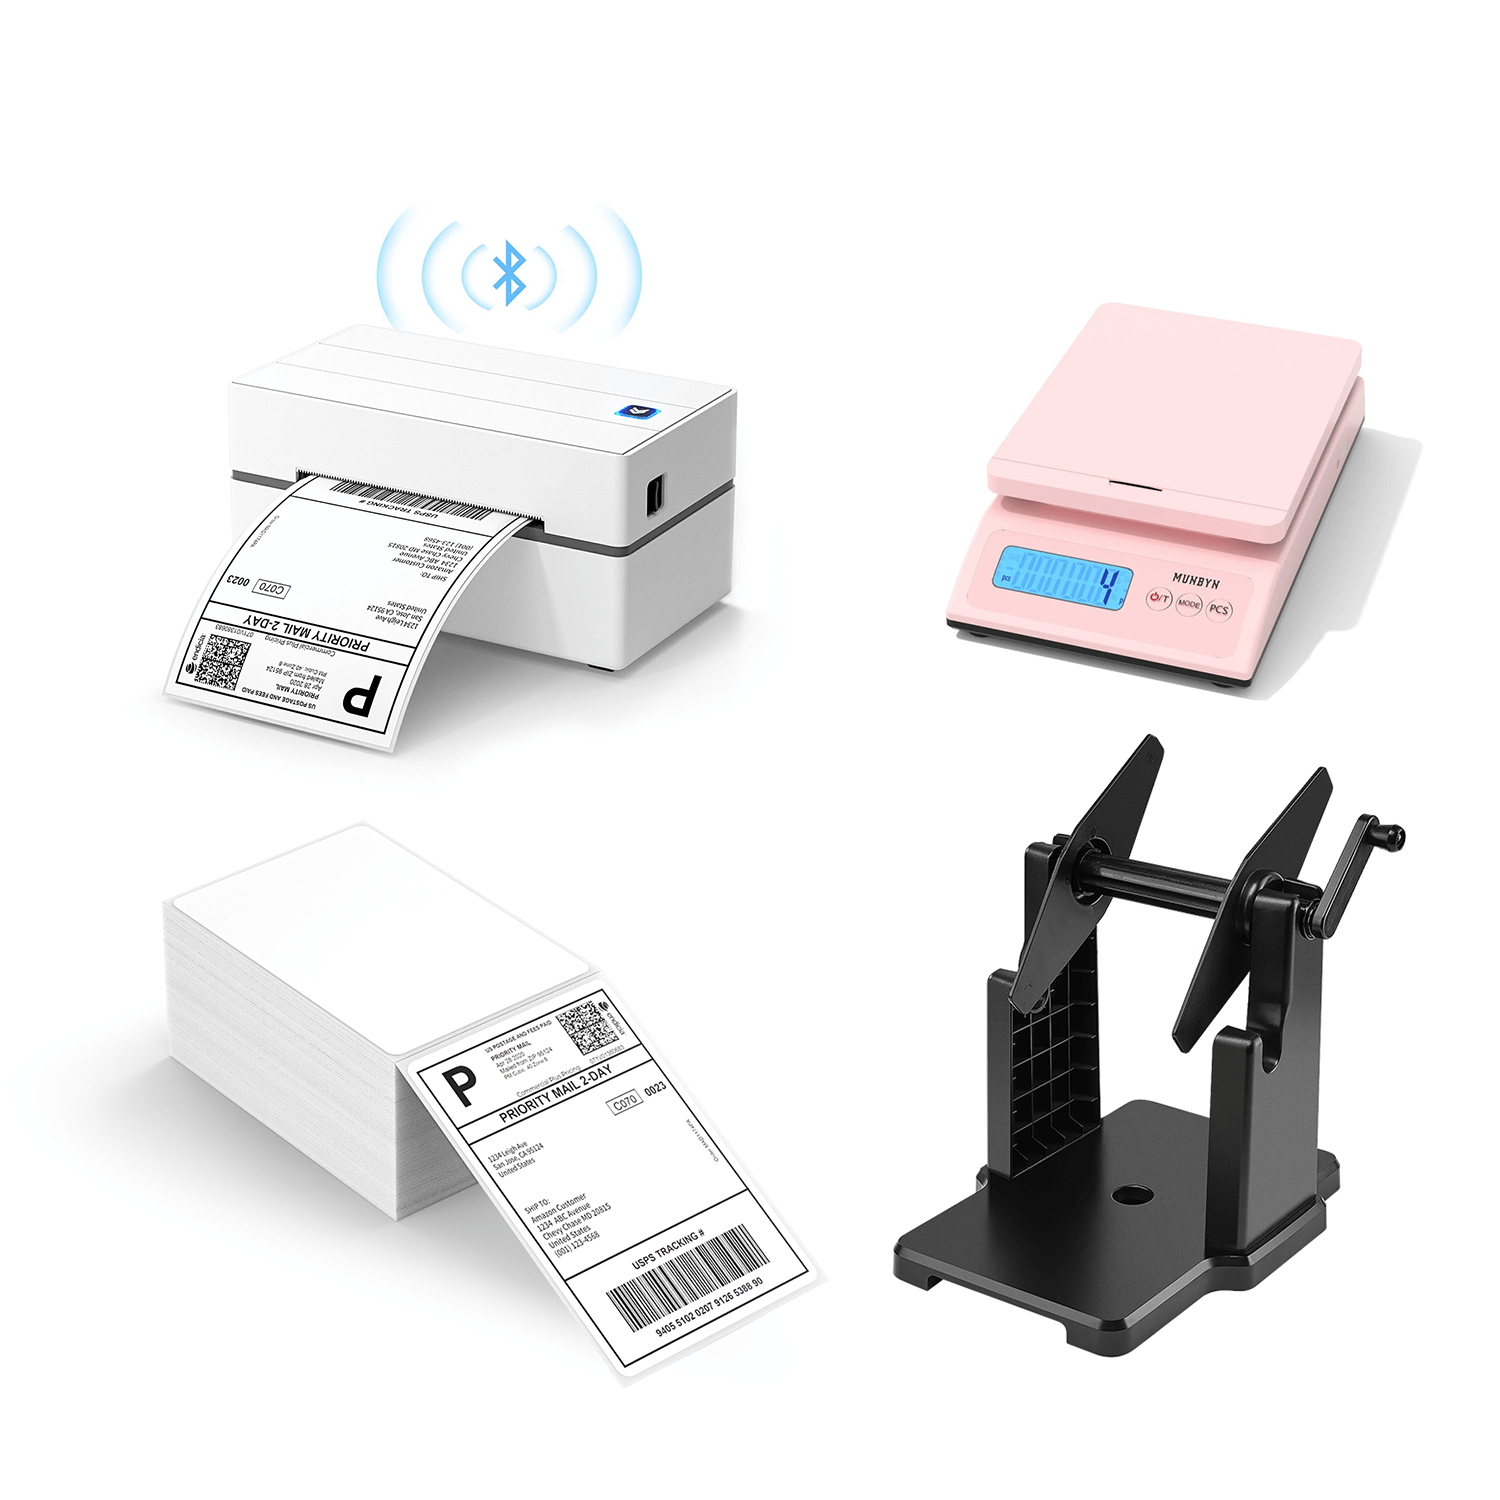 Bluetooth Label Maker Machine With Tape - Brilliant Promos - Be Brilliant!